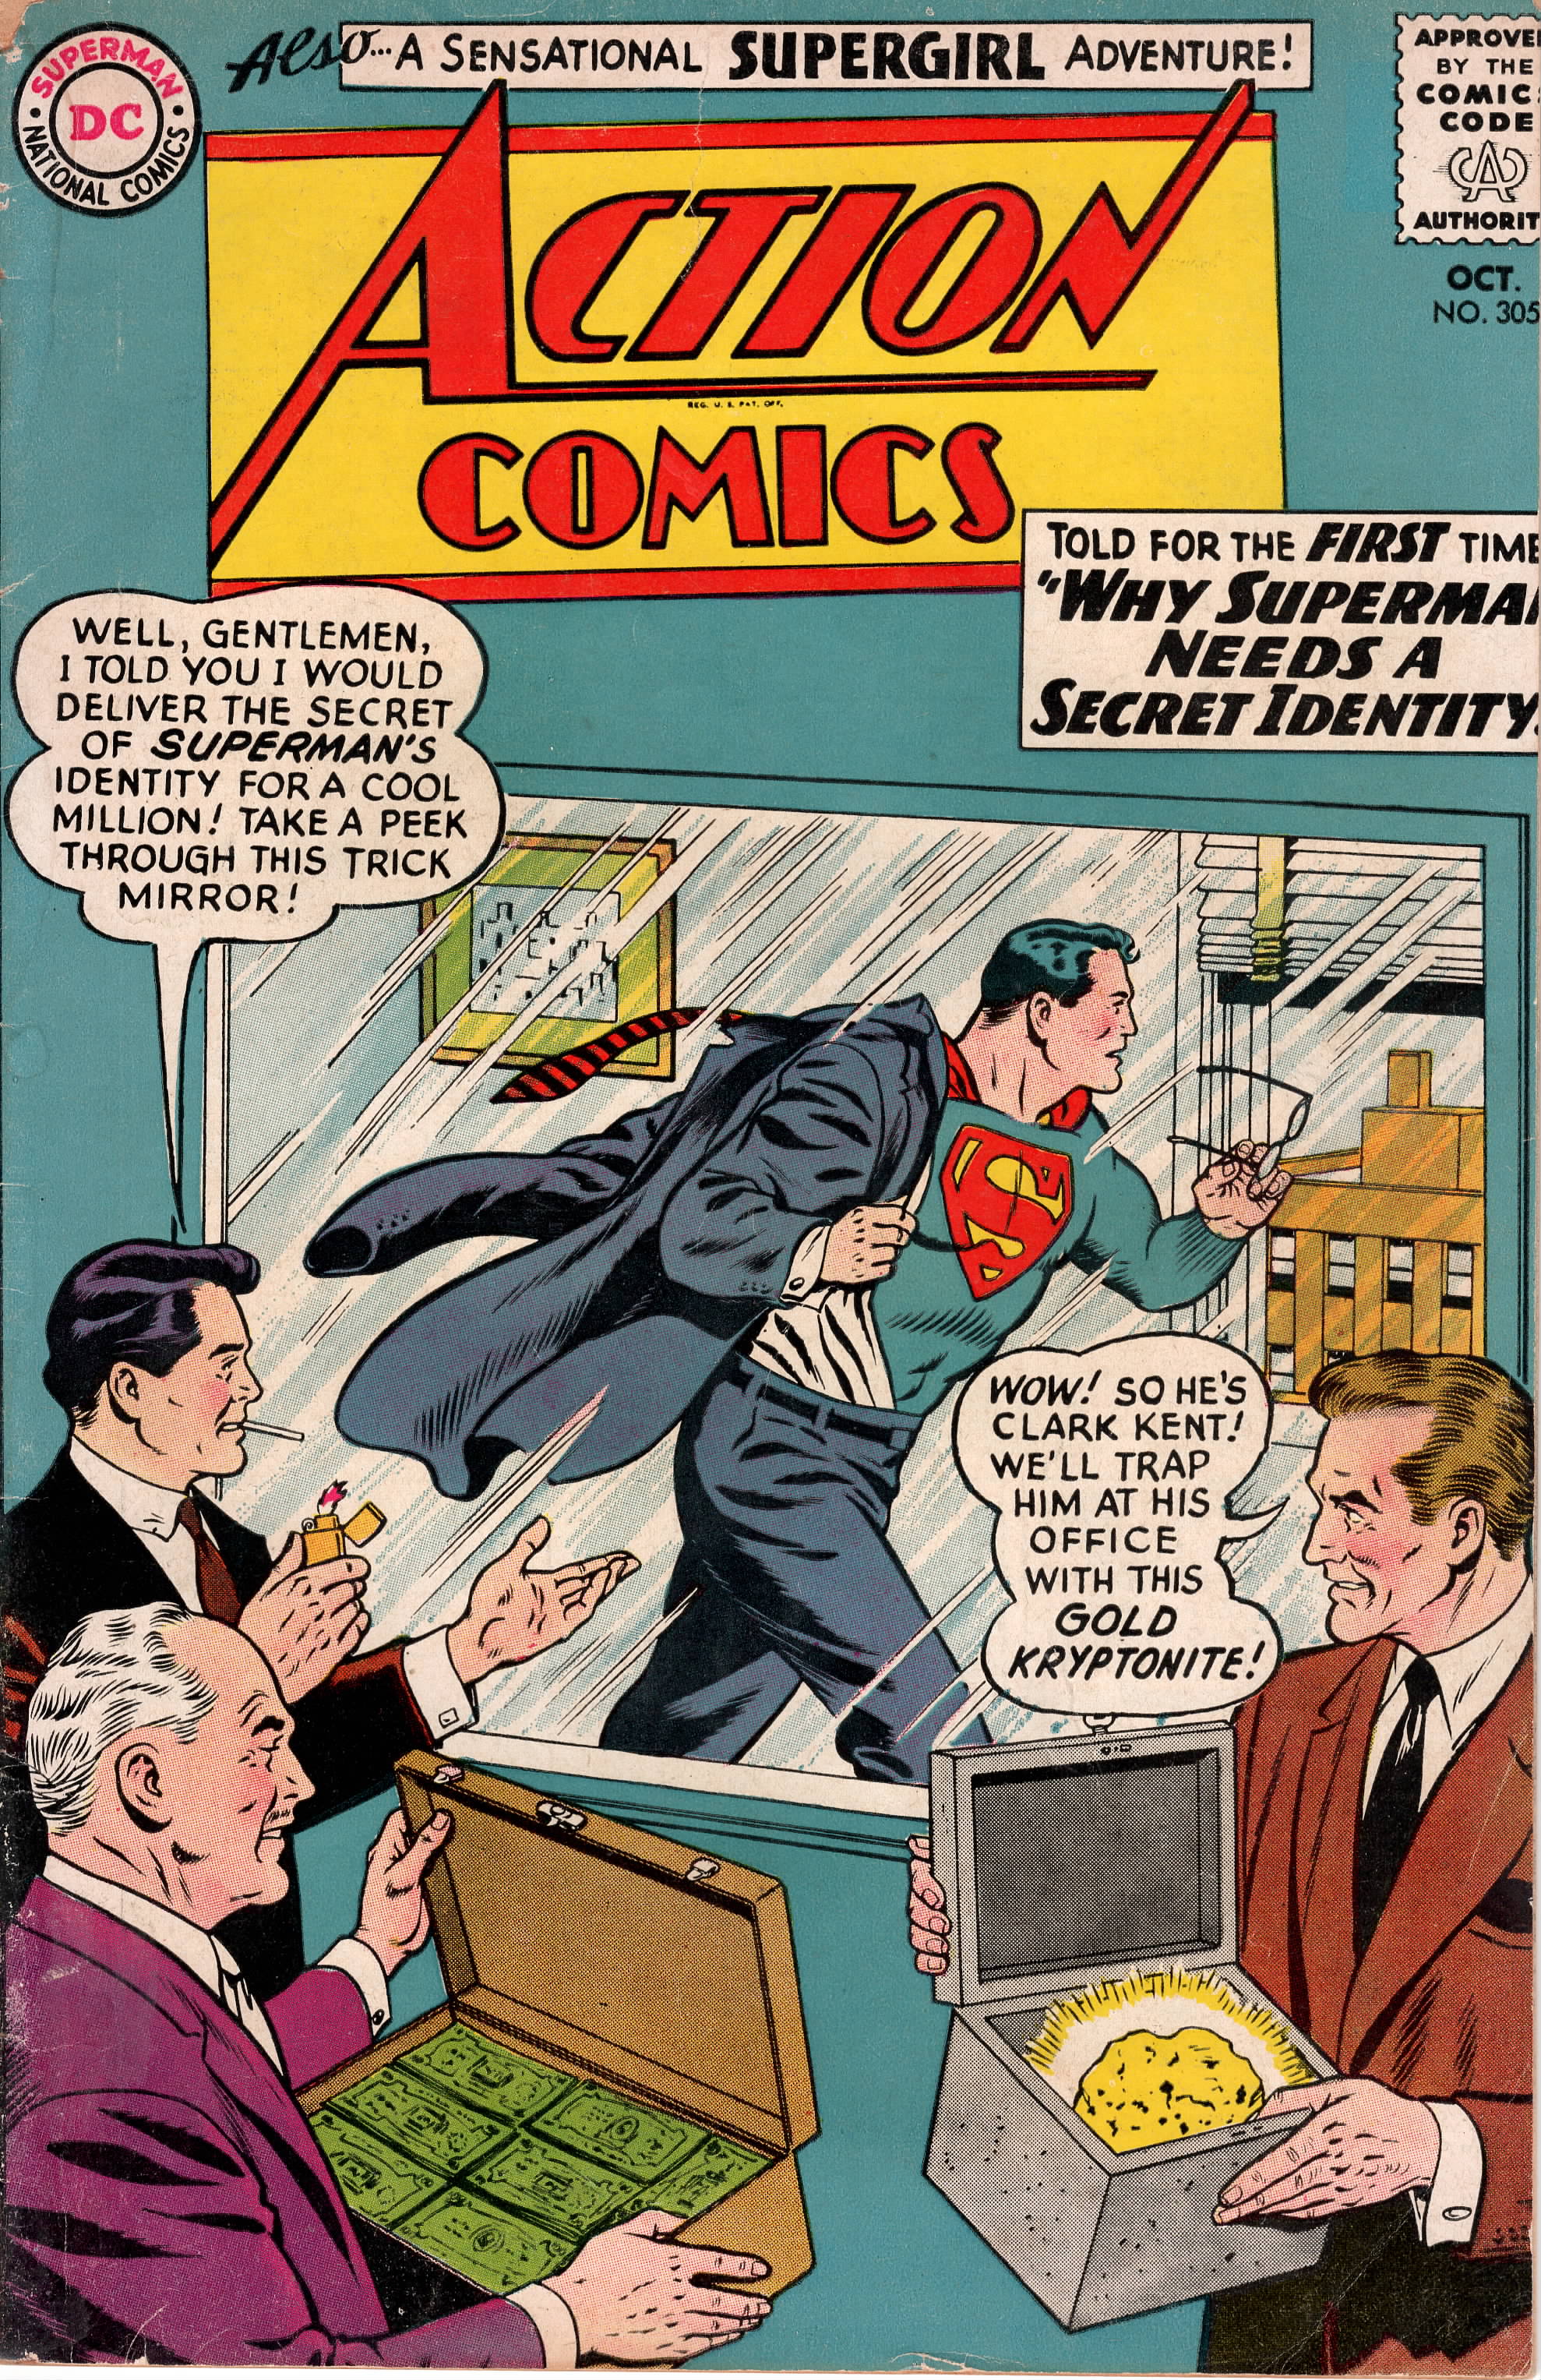 Action Comics #305